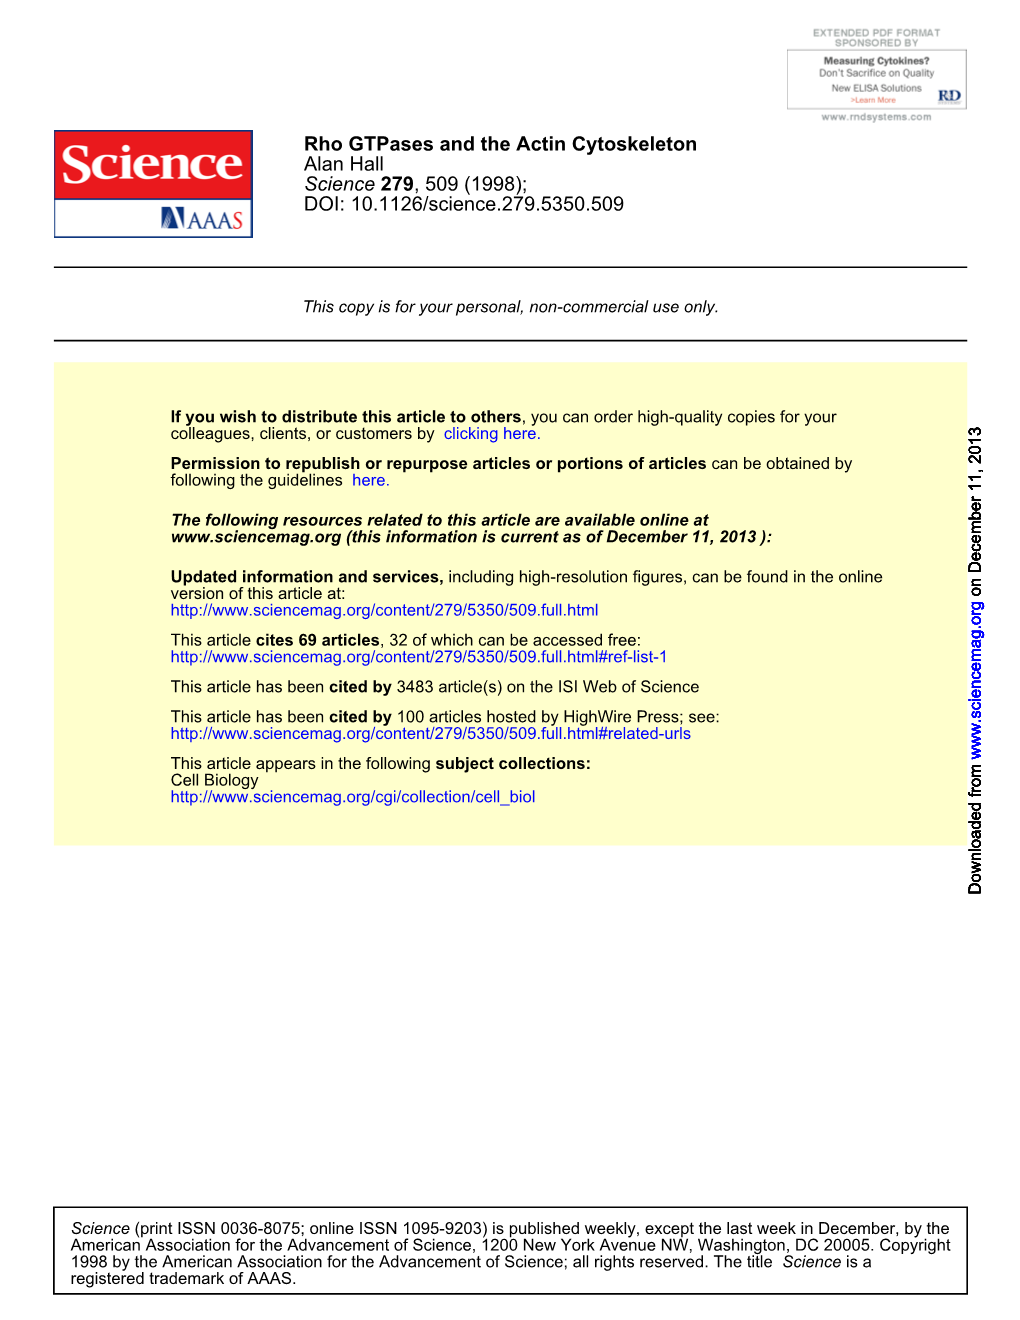 DOI: 10.1126/Science.279.5350.509 , 509 (1998); 279 Science Alan Hall